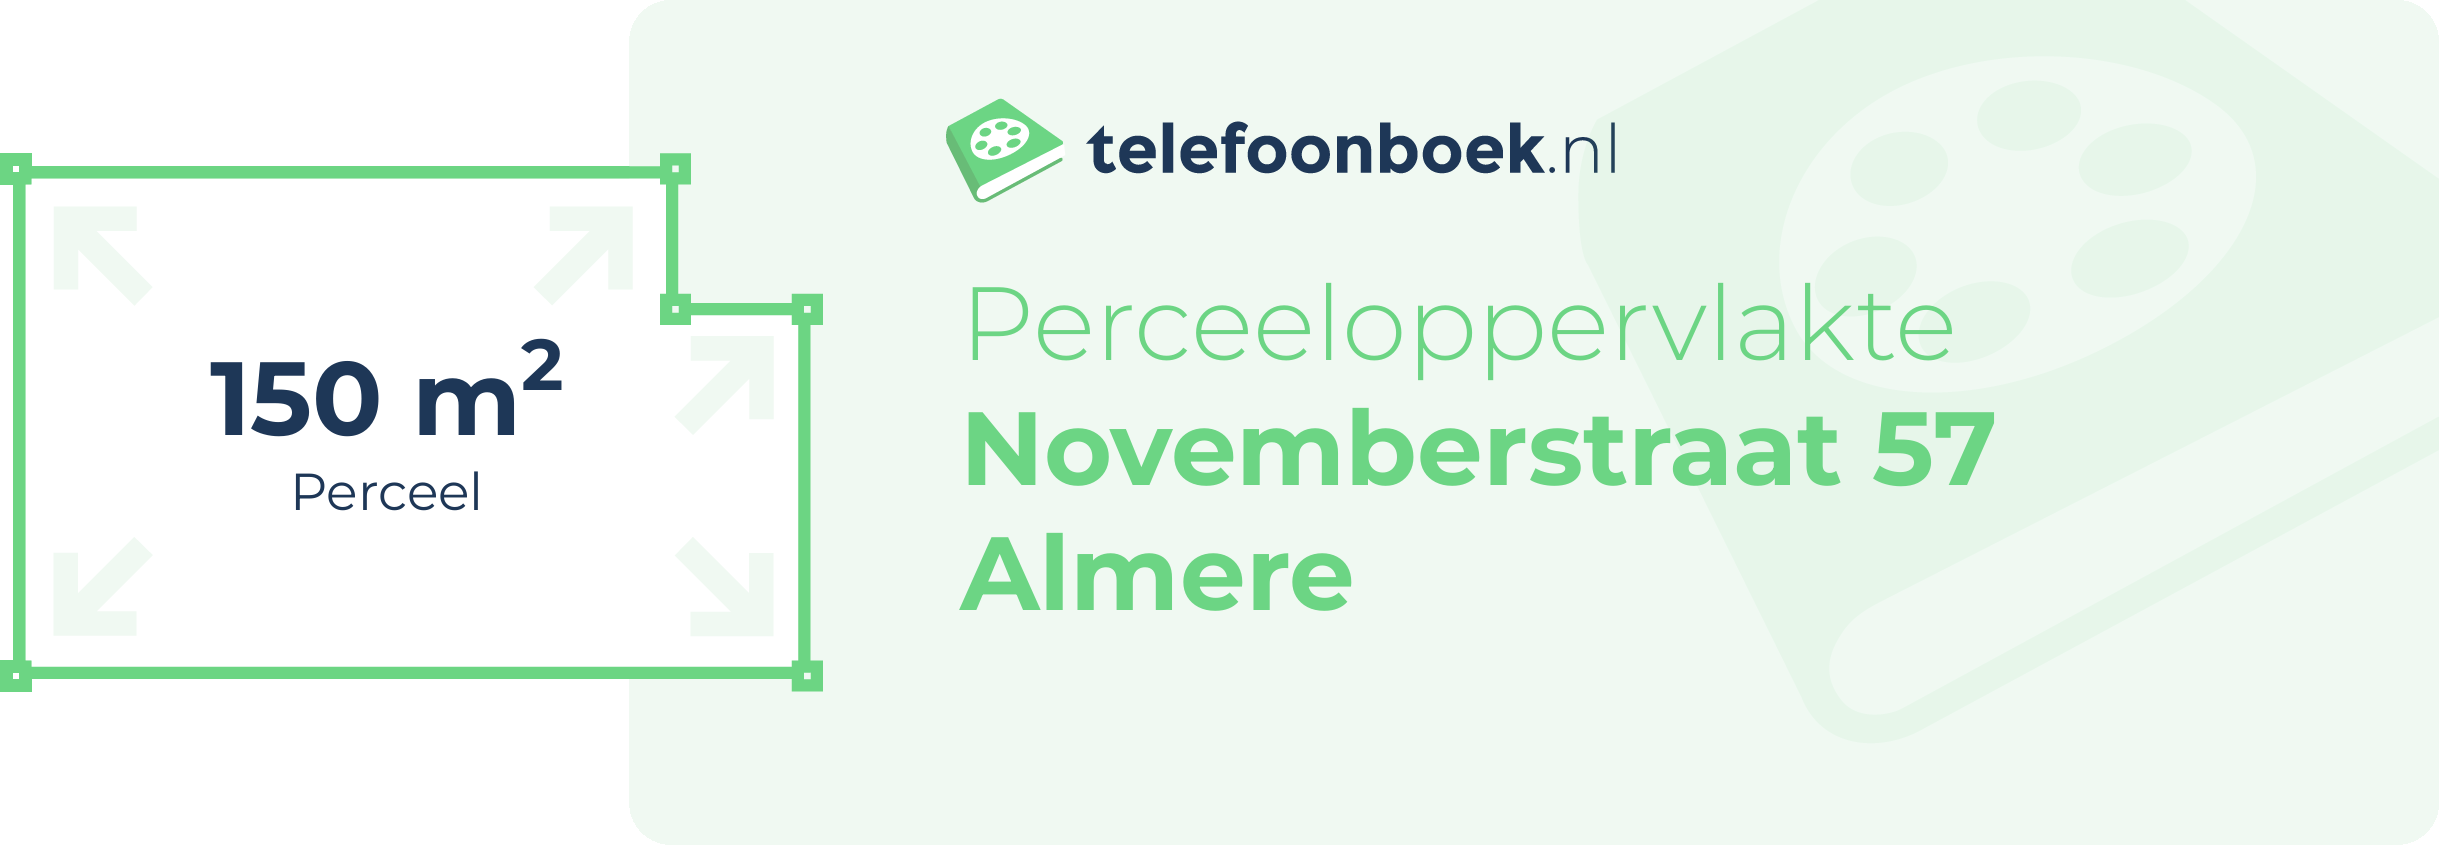 Perceeloppervlakte Novemberstraat 57 Almere